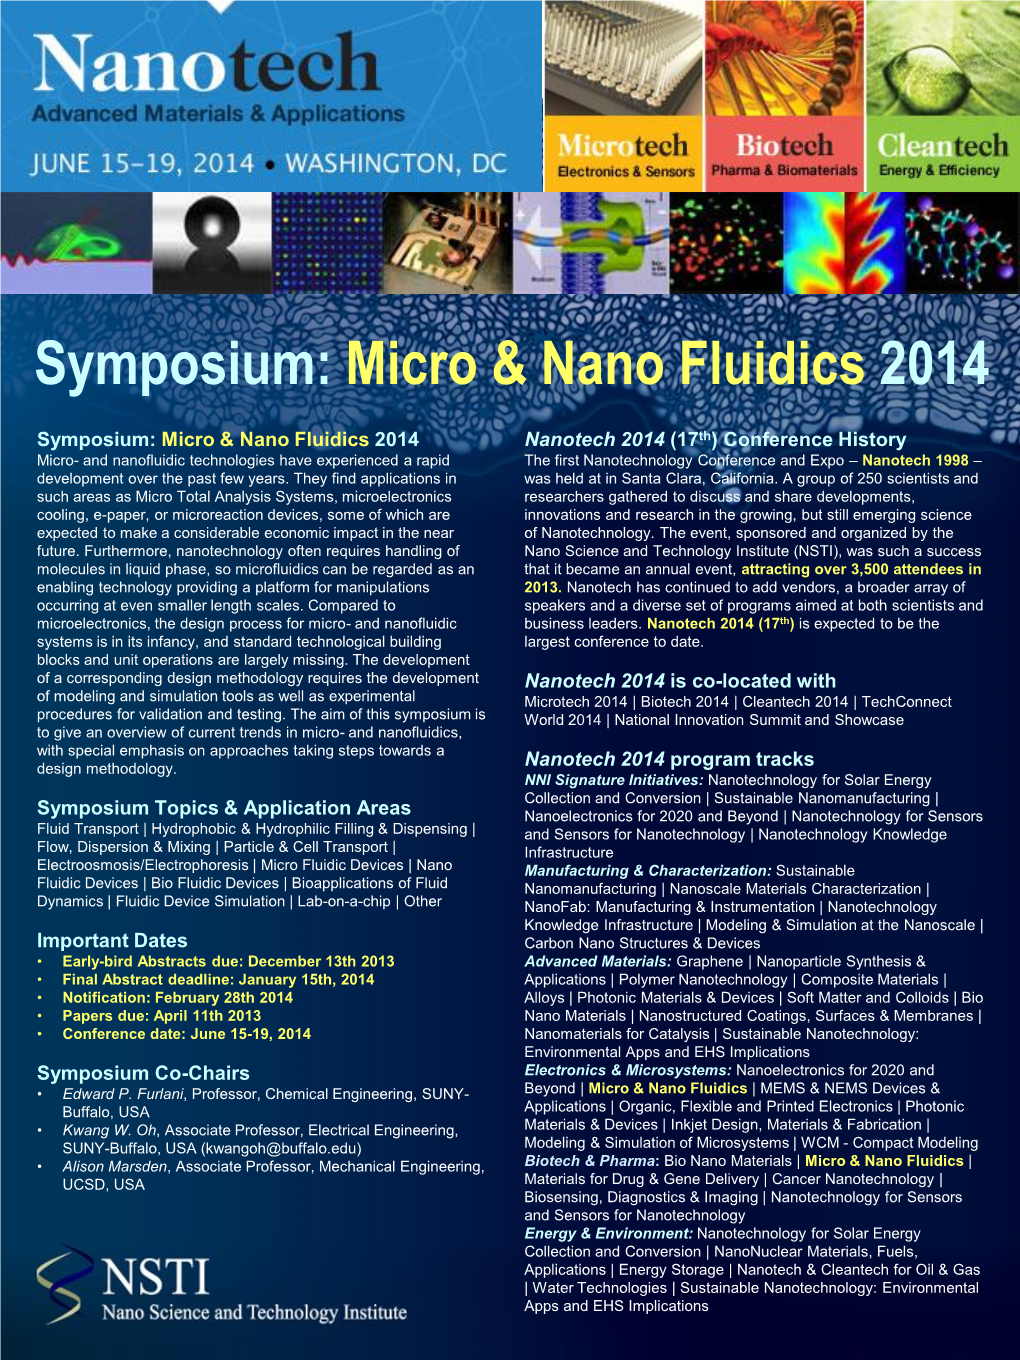 Symposium: Micro & Nano Fluidics 2014